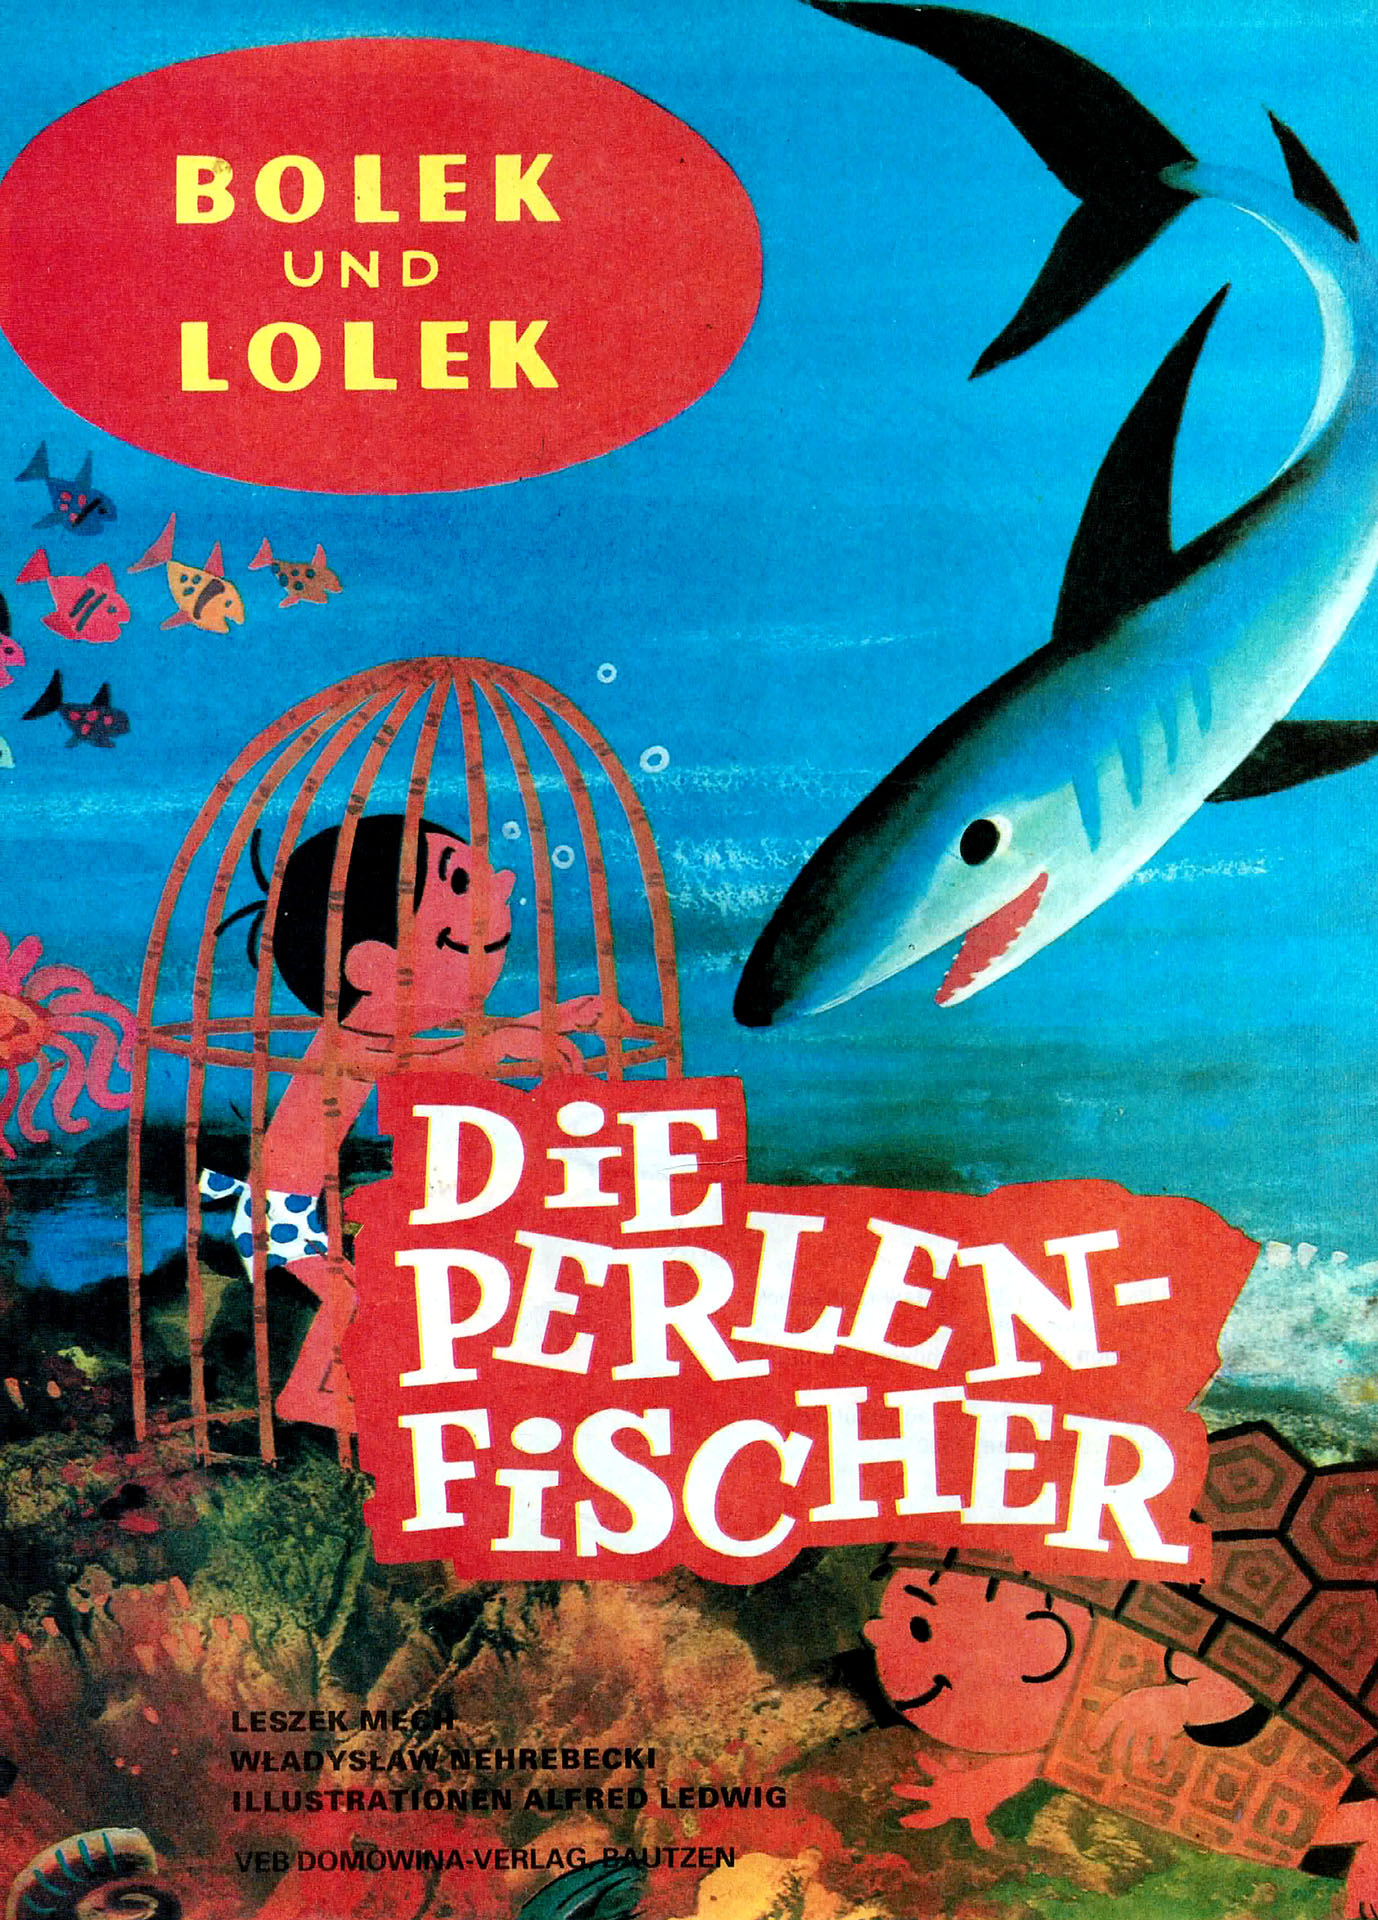 Bolek und Lolek - Die Perlen - Fischer - Mech, Leszek / Mehrebeck, Wladislaw / Ledwig, Alfred